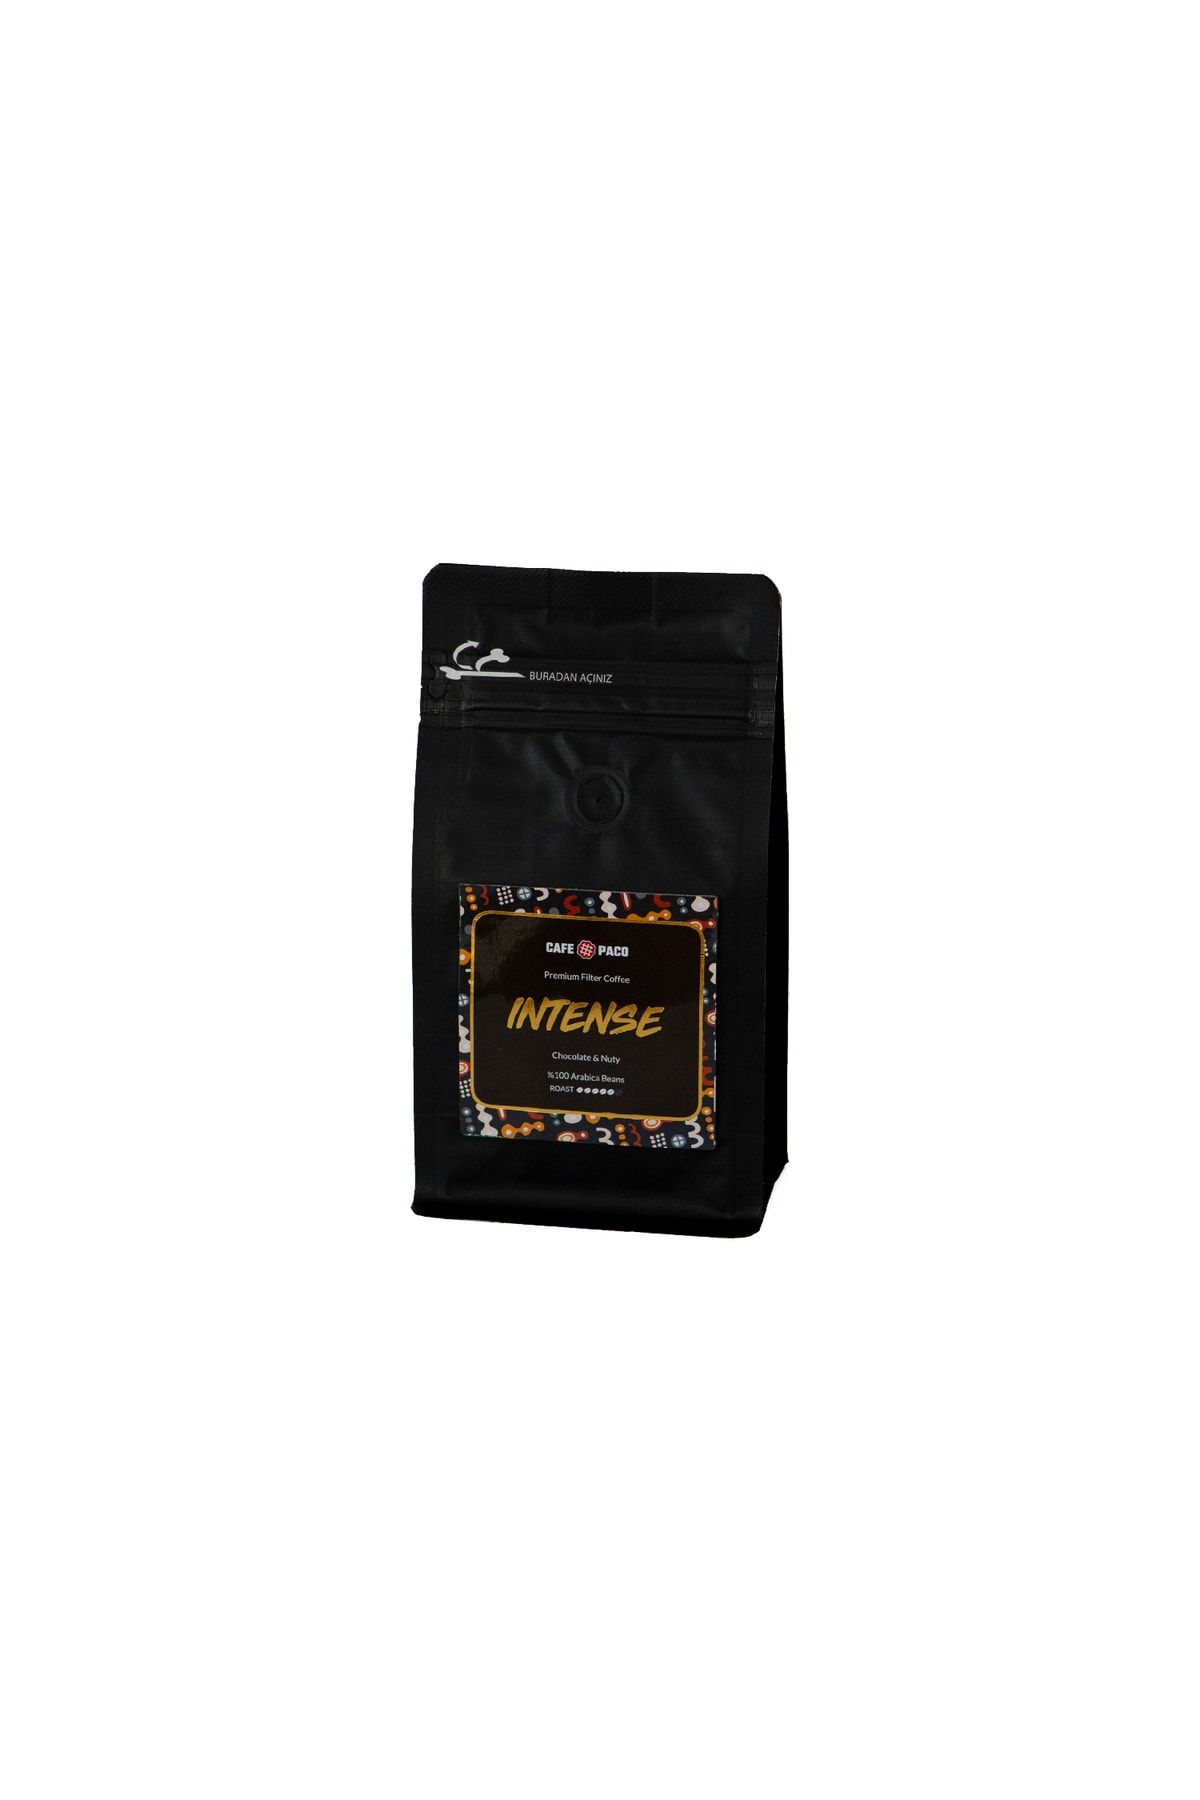 Paco Intense Filter Coffee 250gr (öğütülmüş)